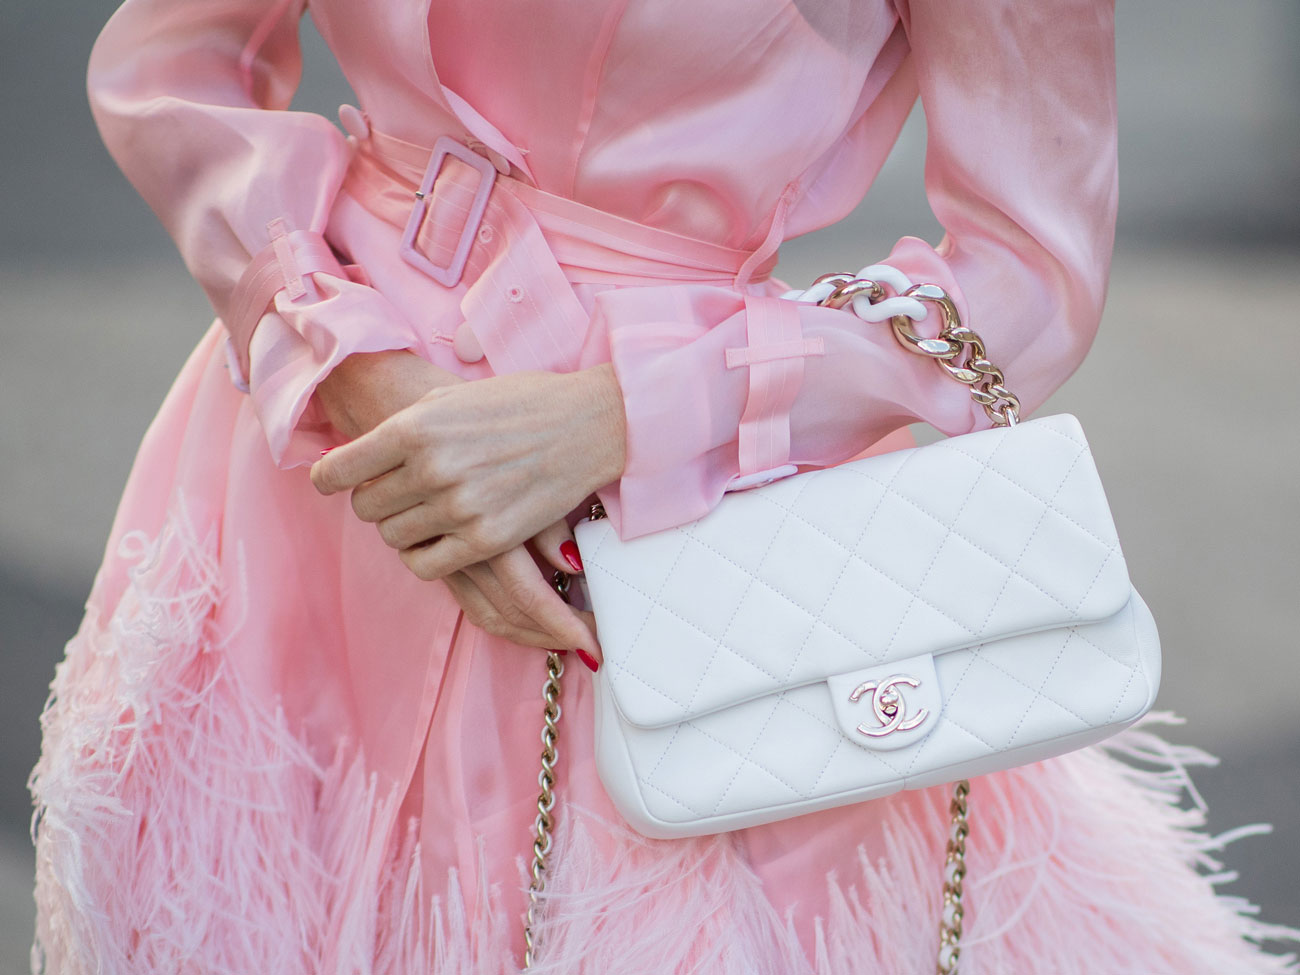 A Brief History of Chanel Handbags | Luxe Love